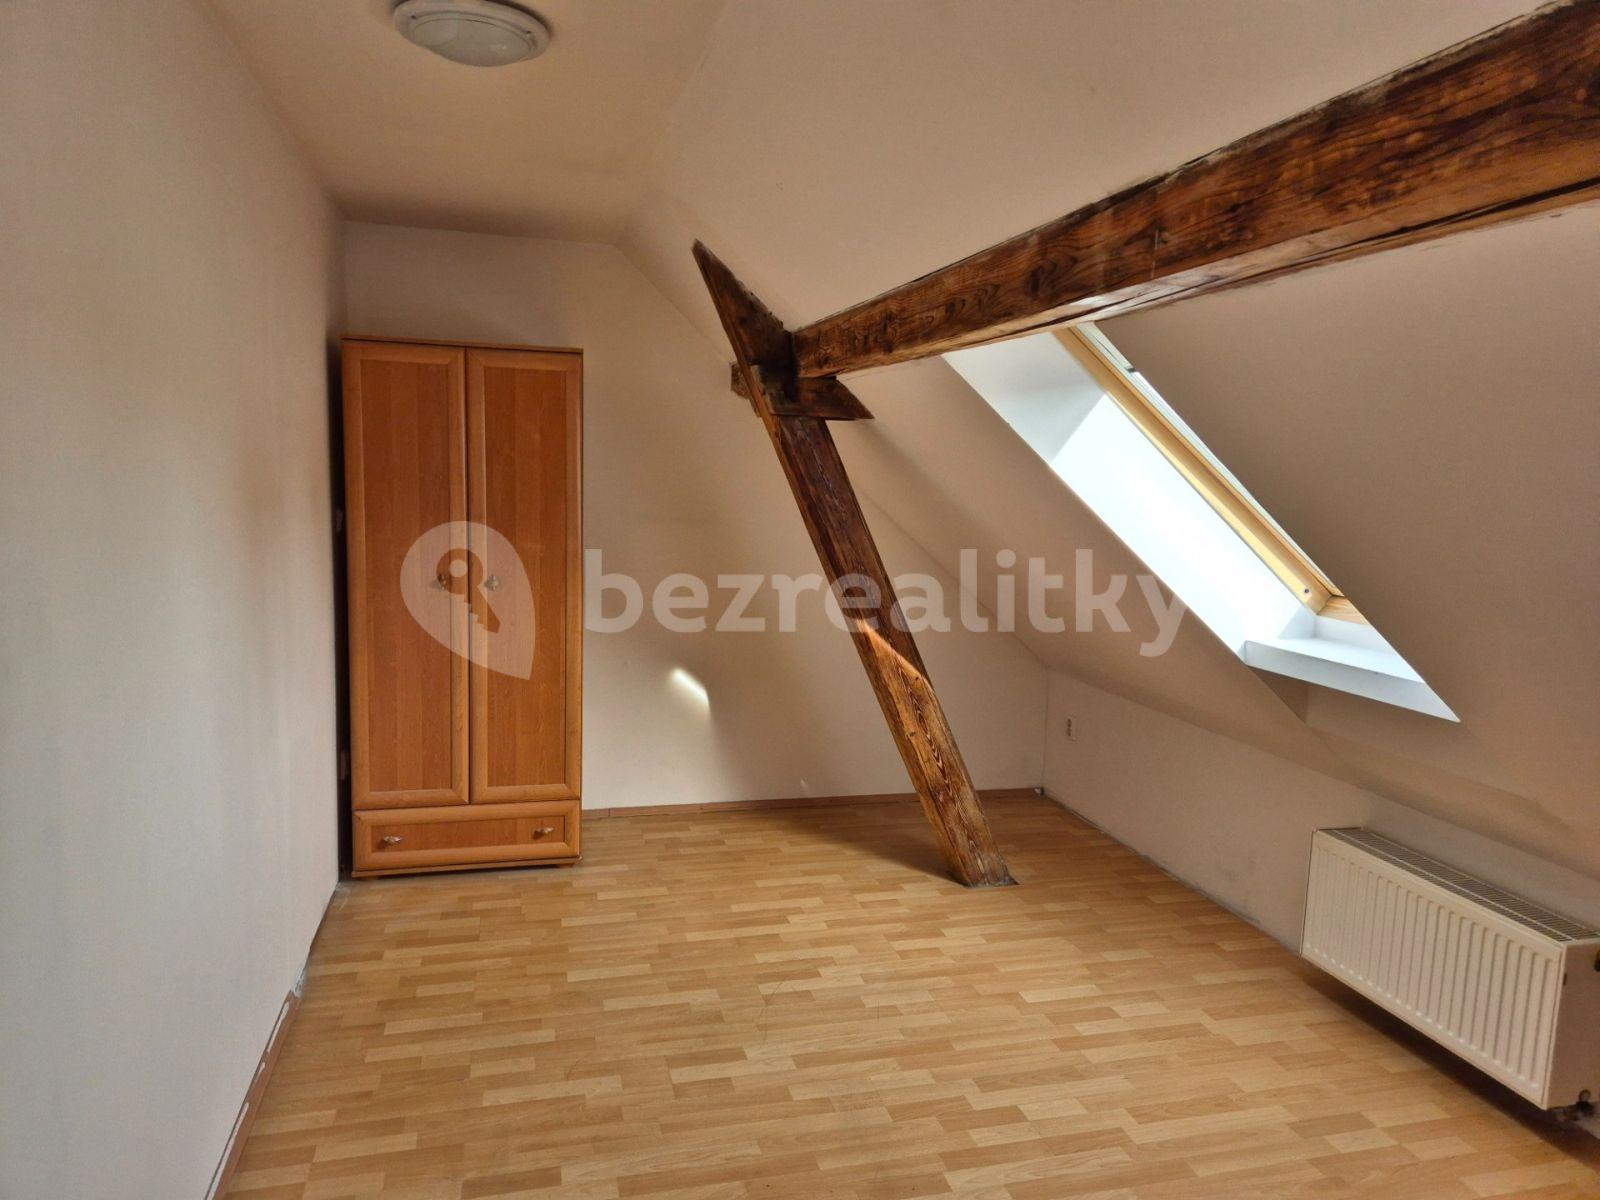 Predaj bytu 3-izbový 60 m², nám. T. G. Masaryka, Smečno, Středočeský kraj